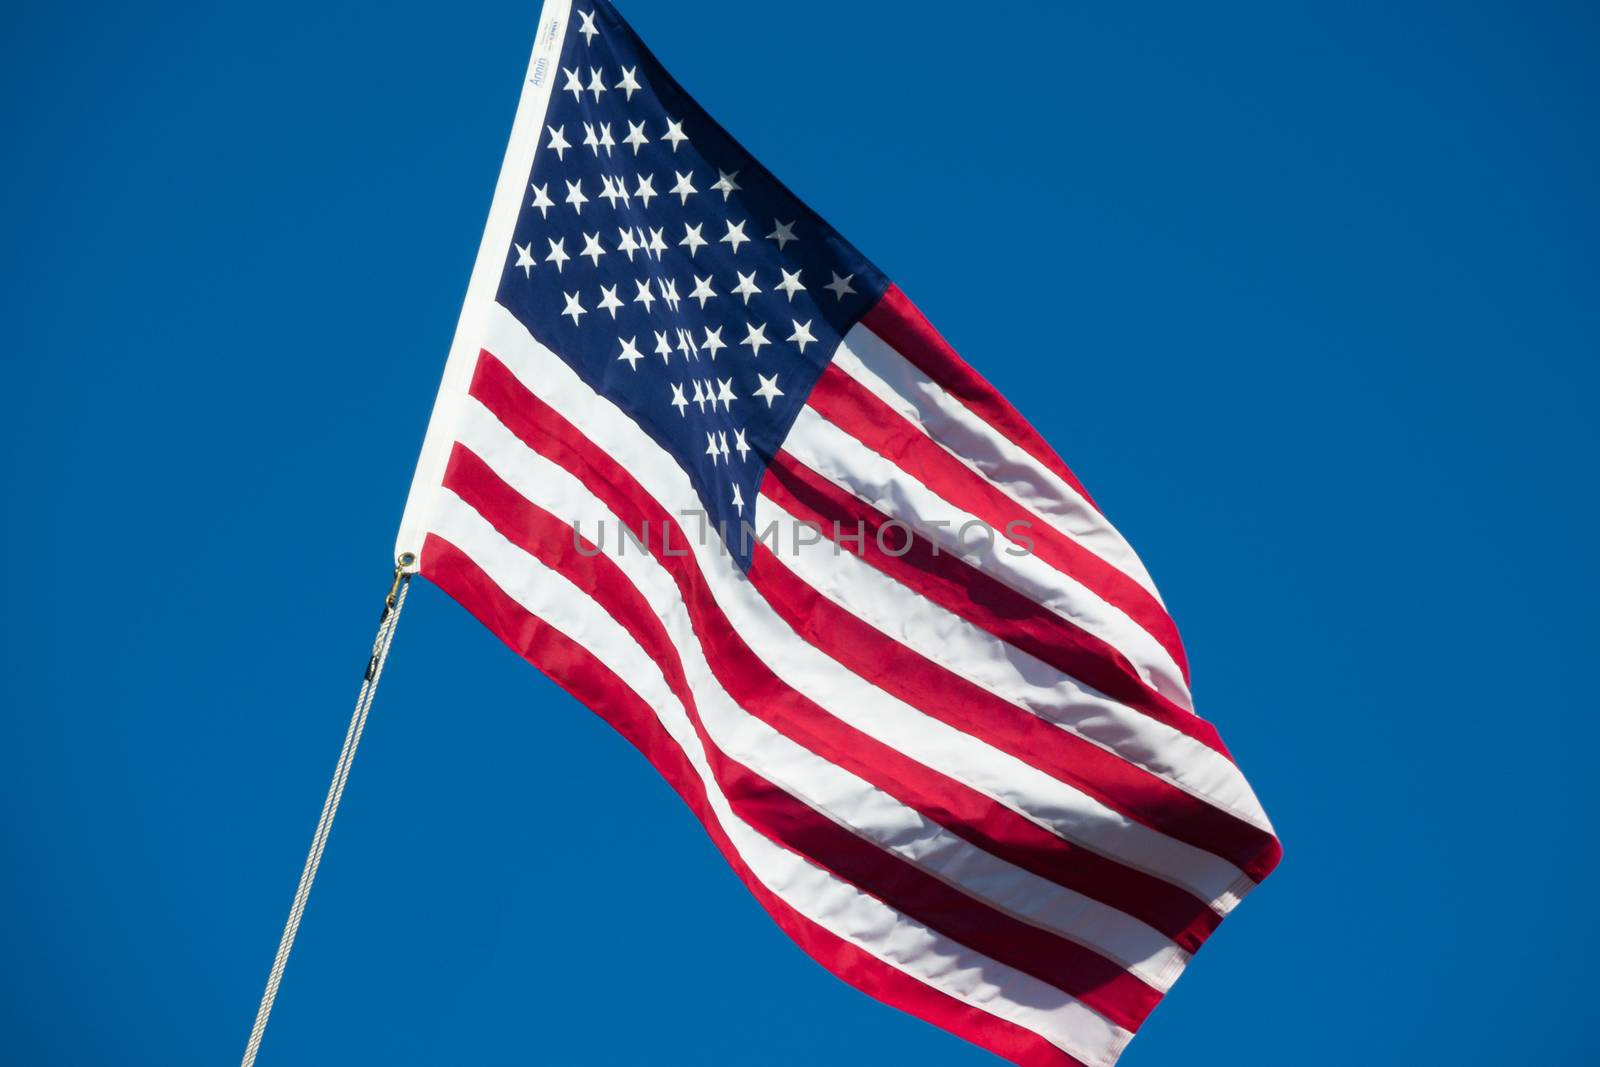 United States of America flag star spangled banner stars and stripes blue sky